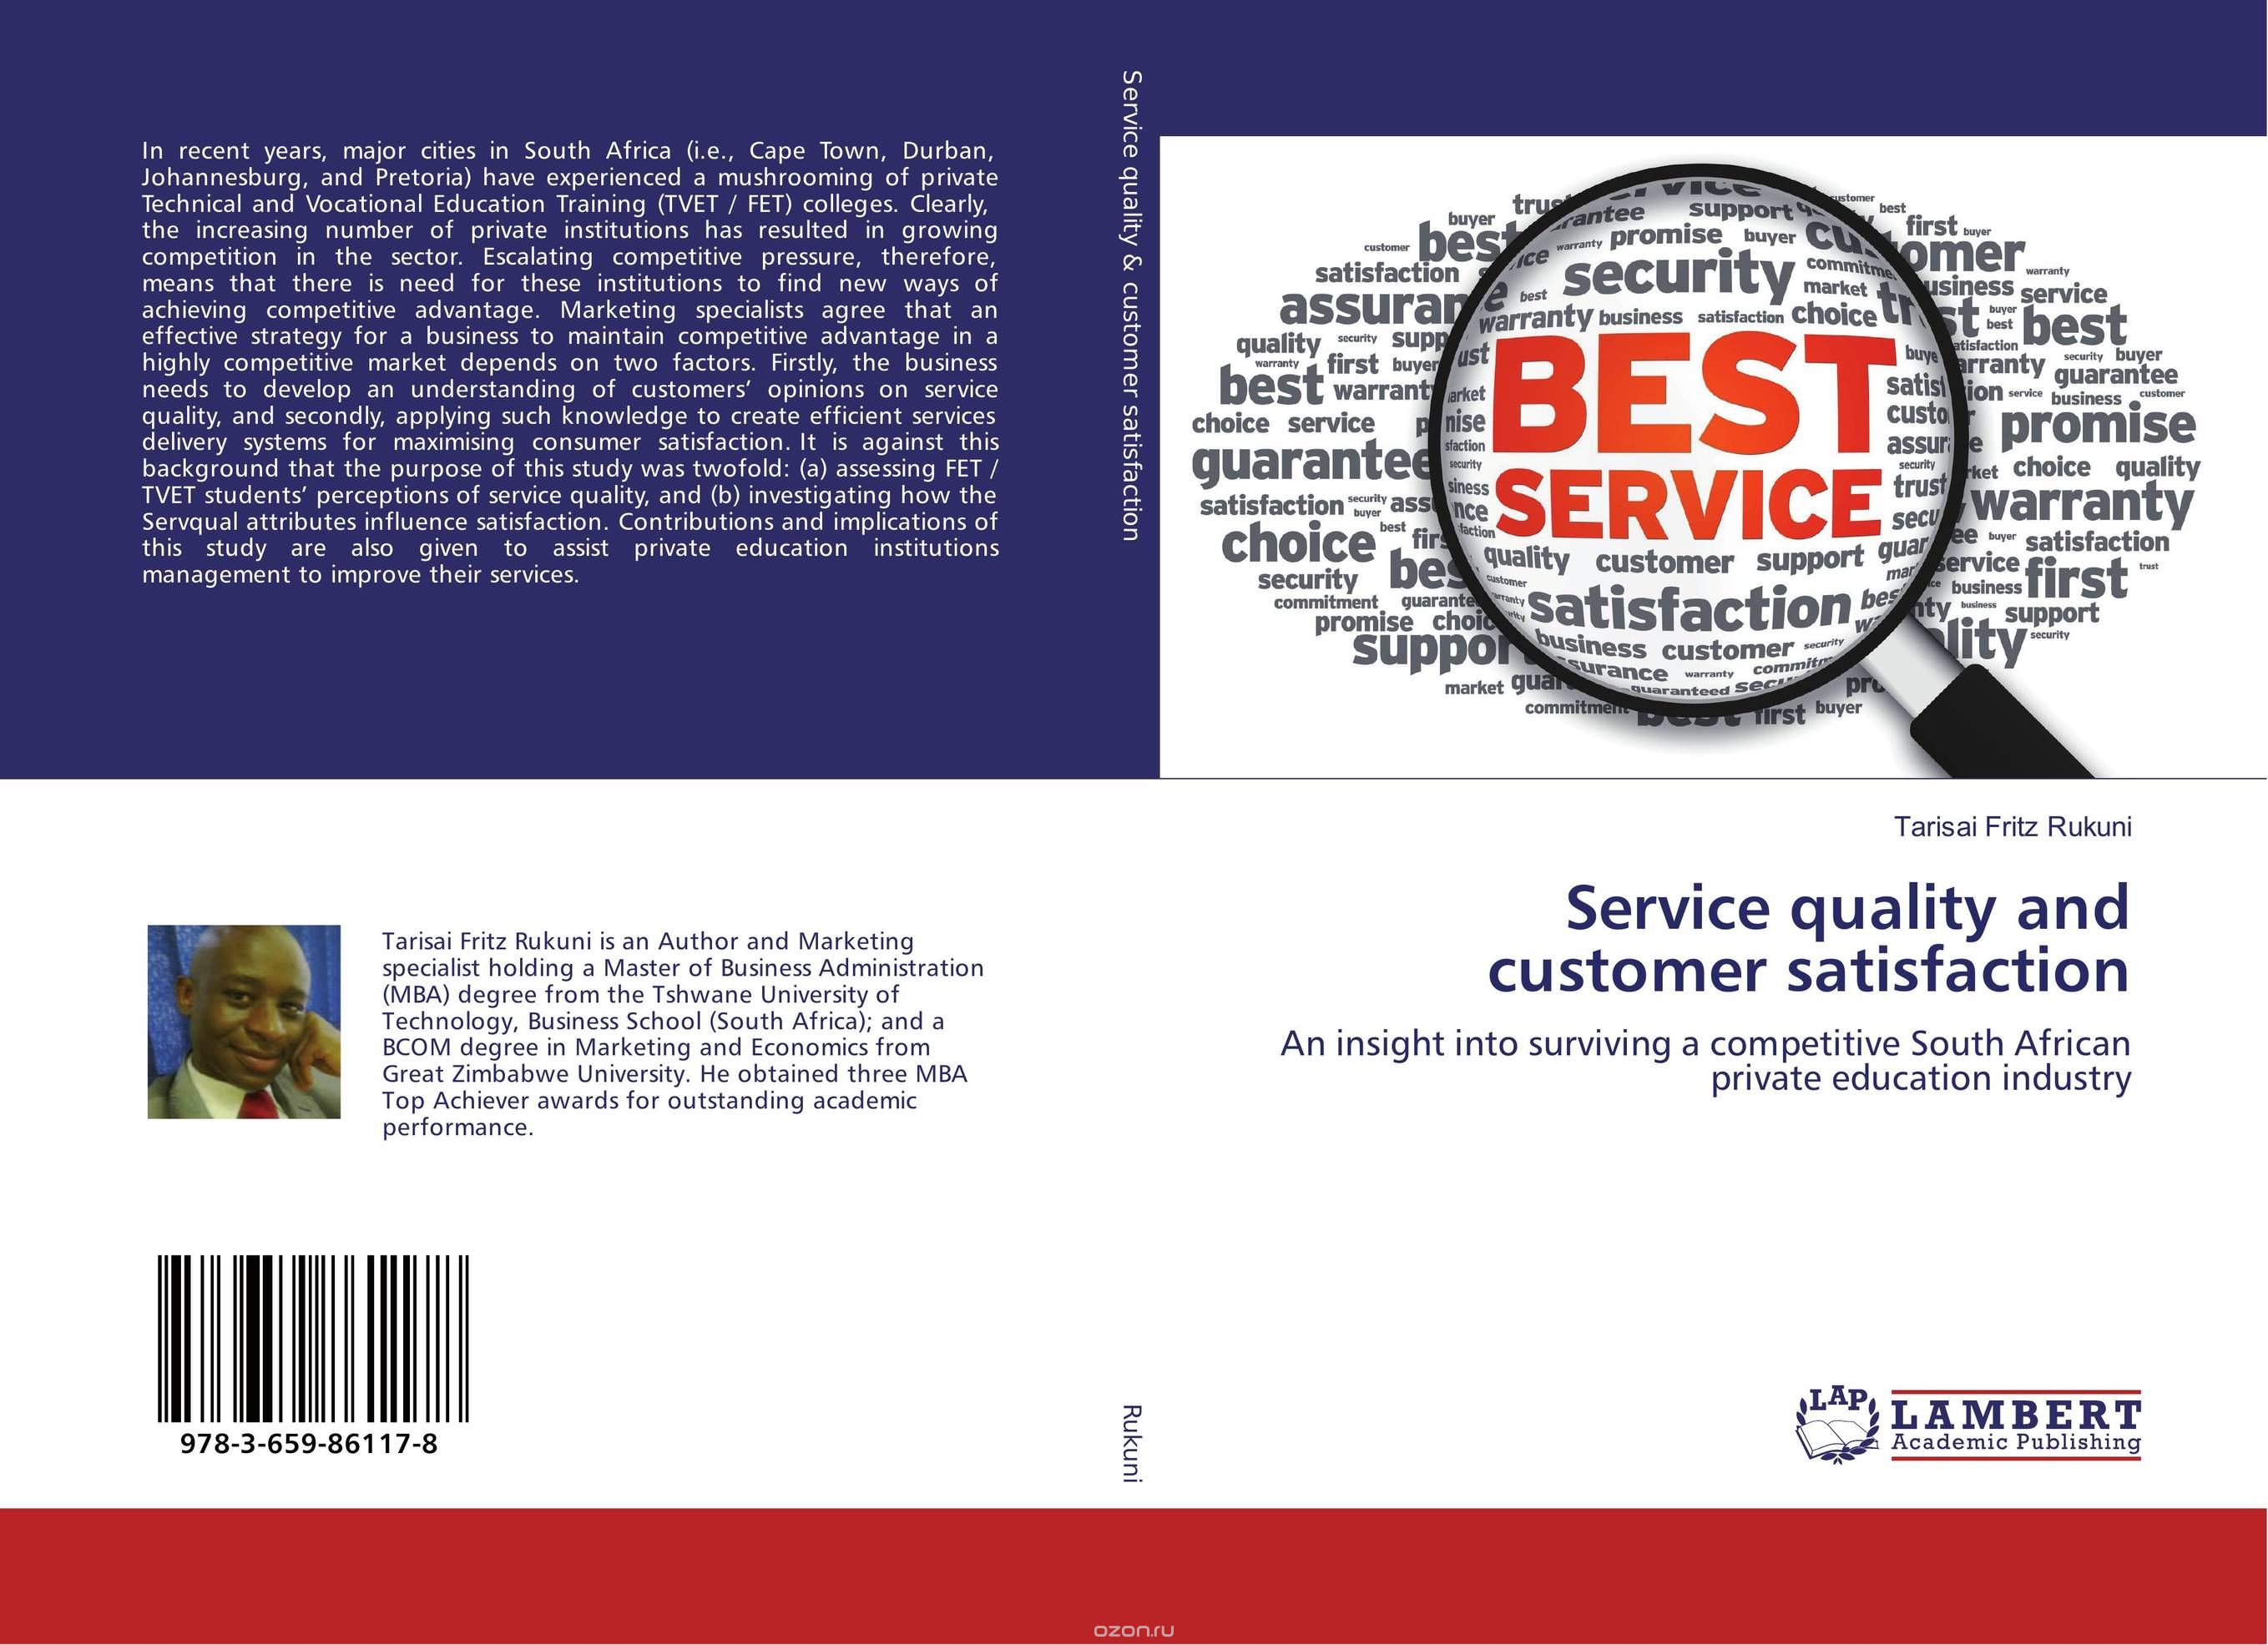 Скачать книгу "Service quality and customer satisfaction"